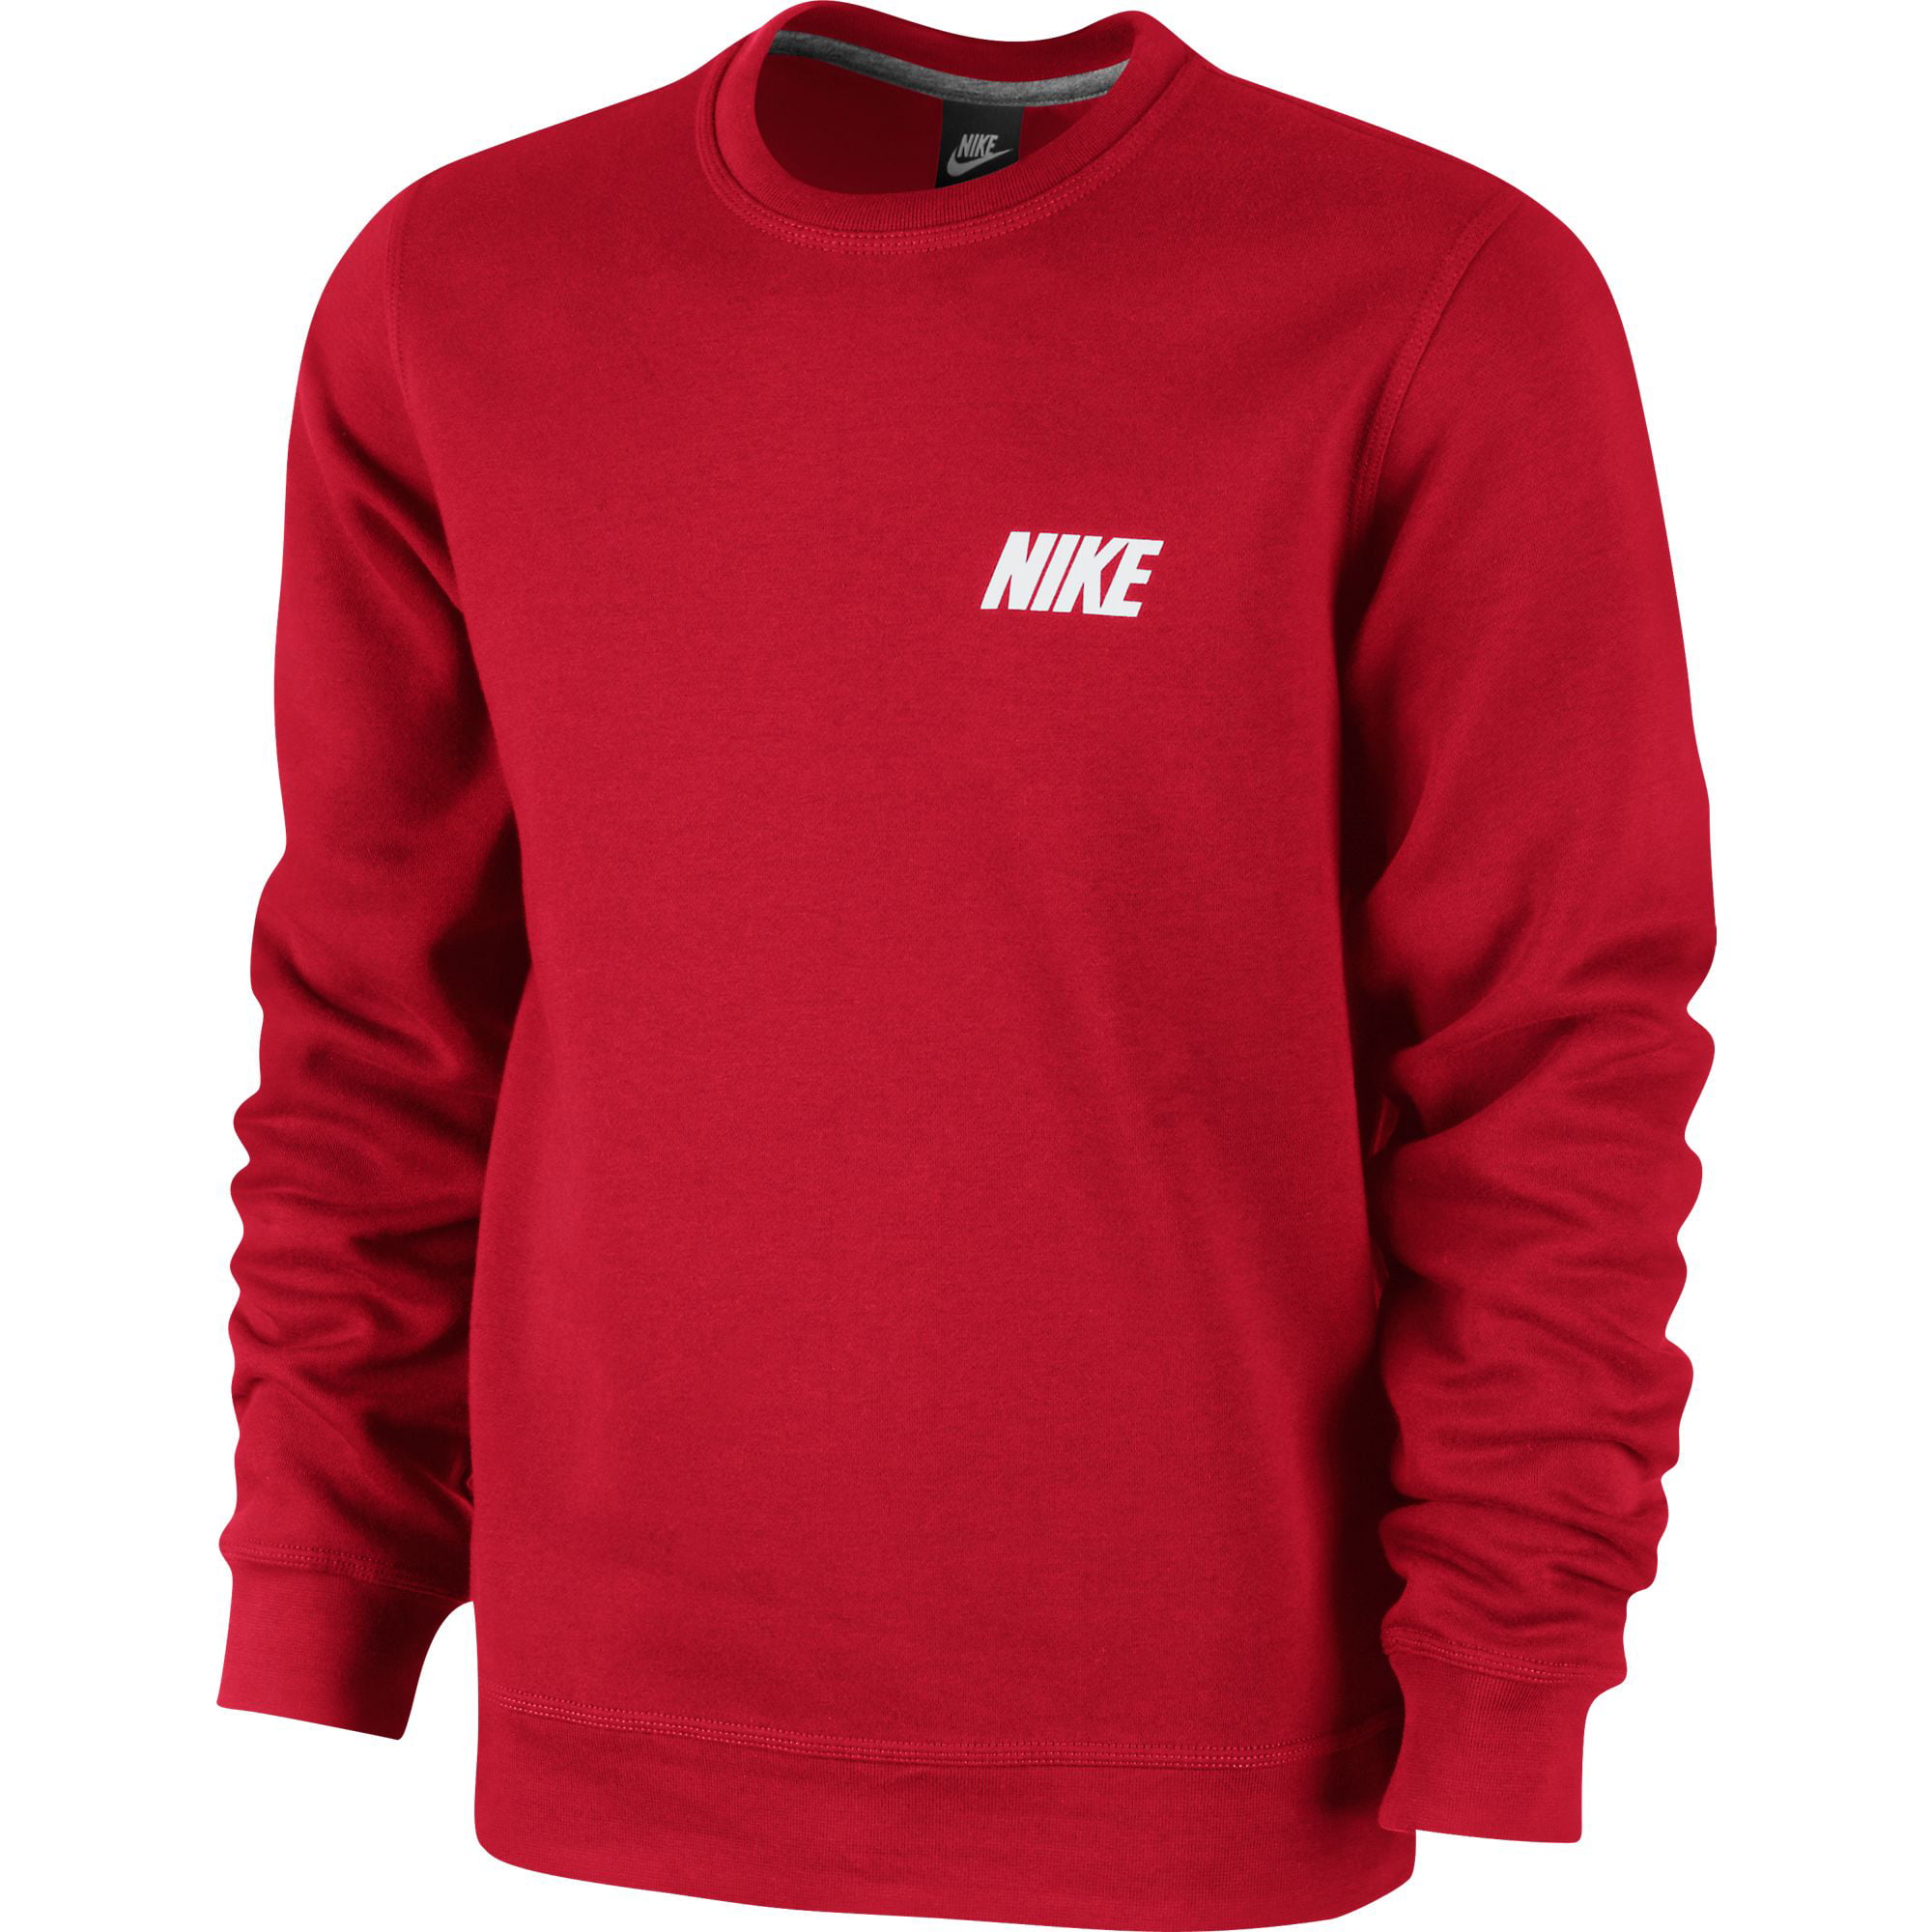 Nike - Nike Crew Neck Men's Sweatshirt Red/White 545129-611 - Walmart ...